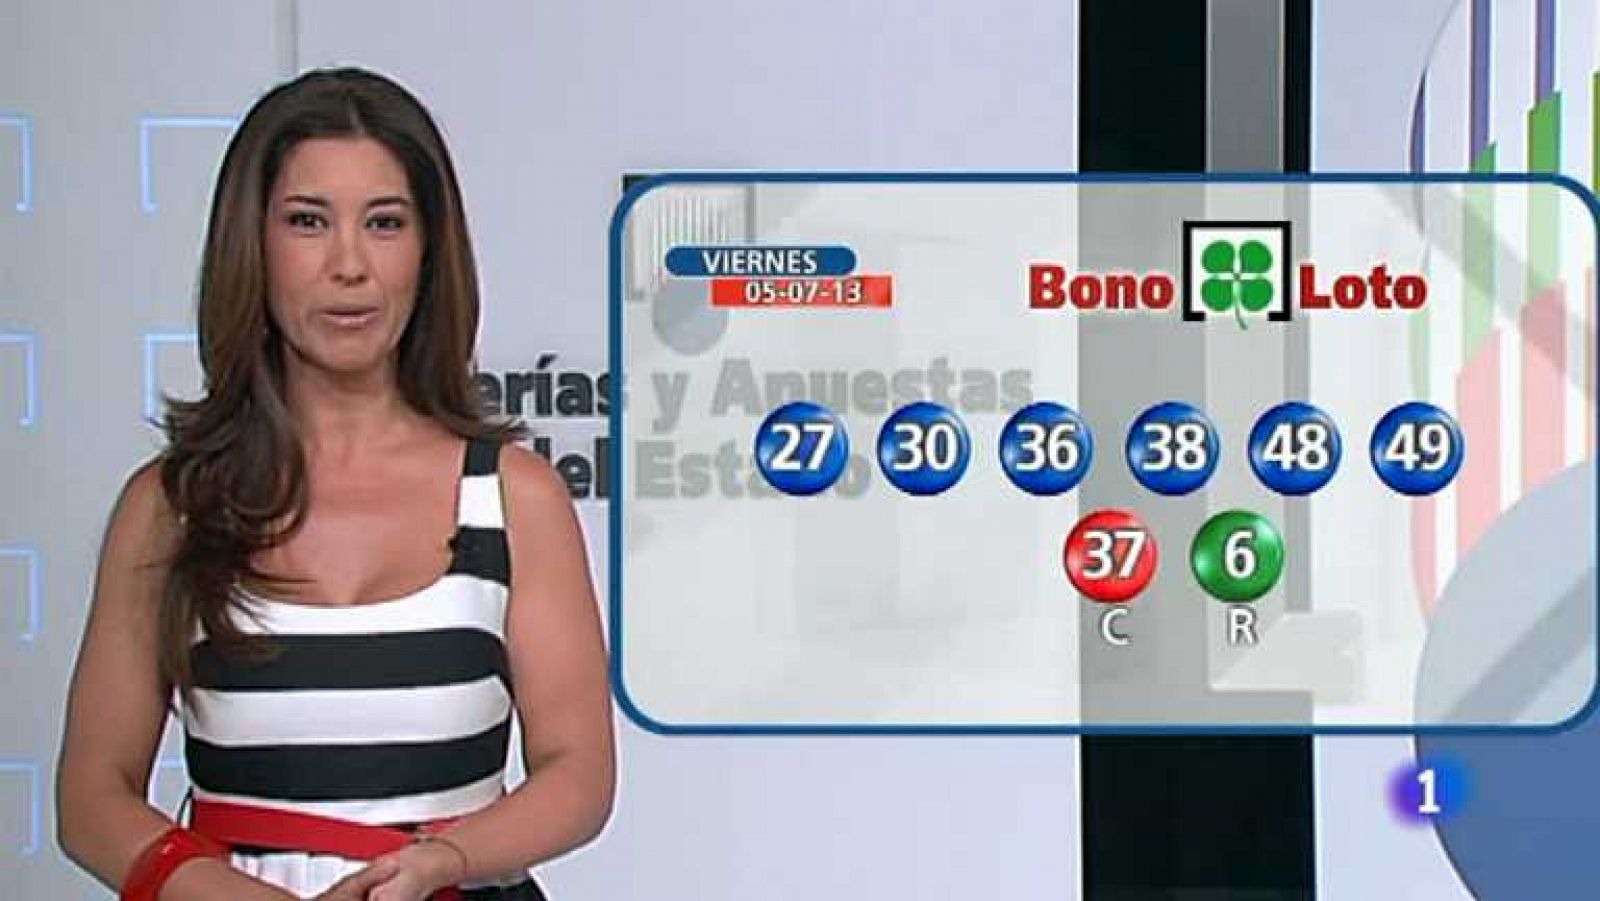 Loterías: Bonoloto + Euromillones - 05/07/13 | RTVE Play